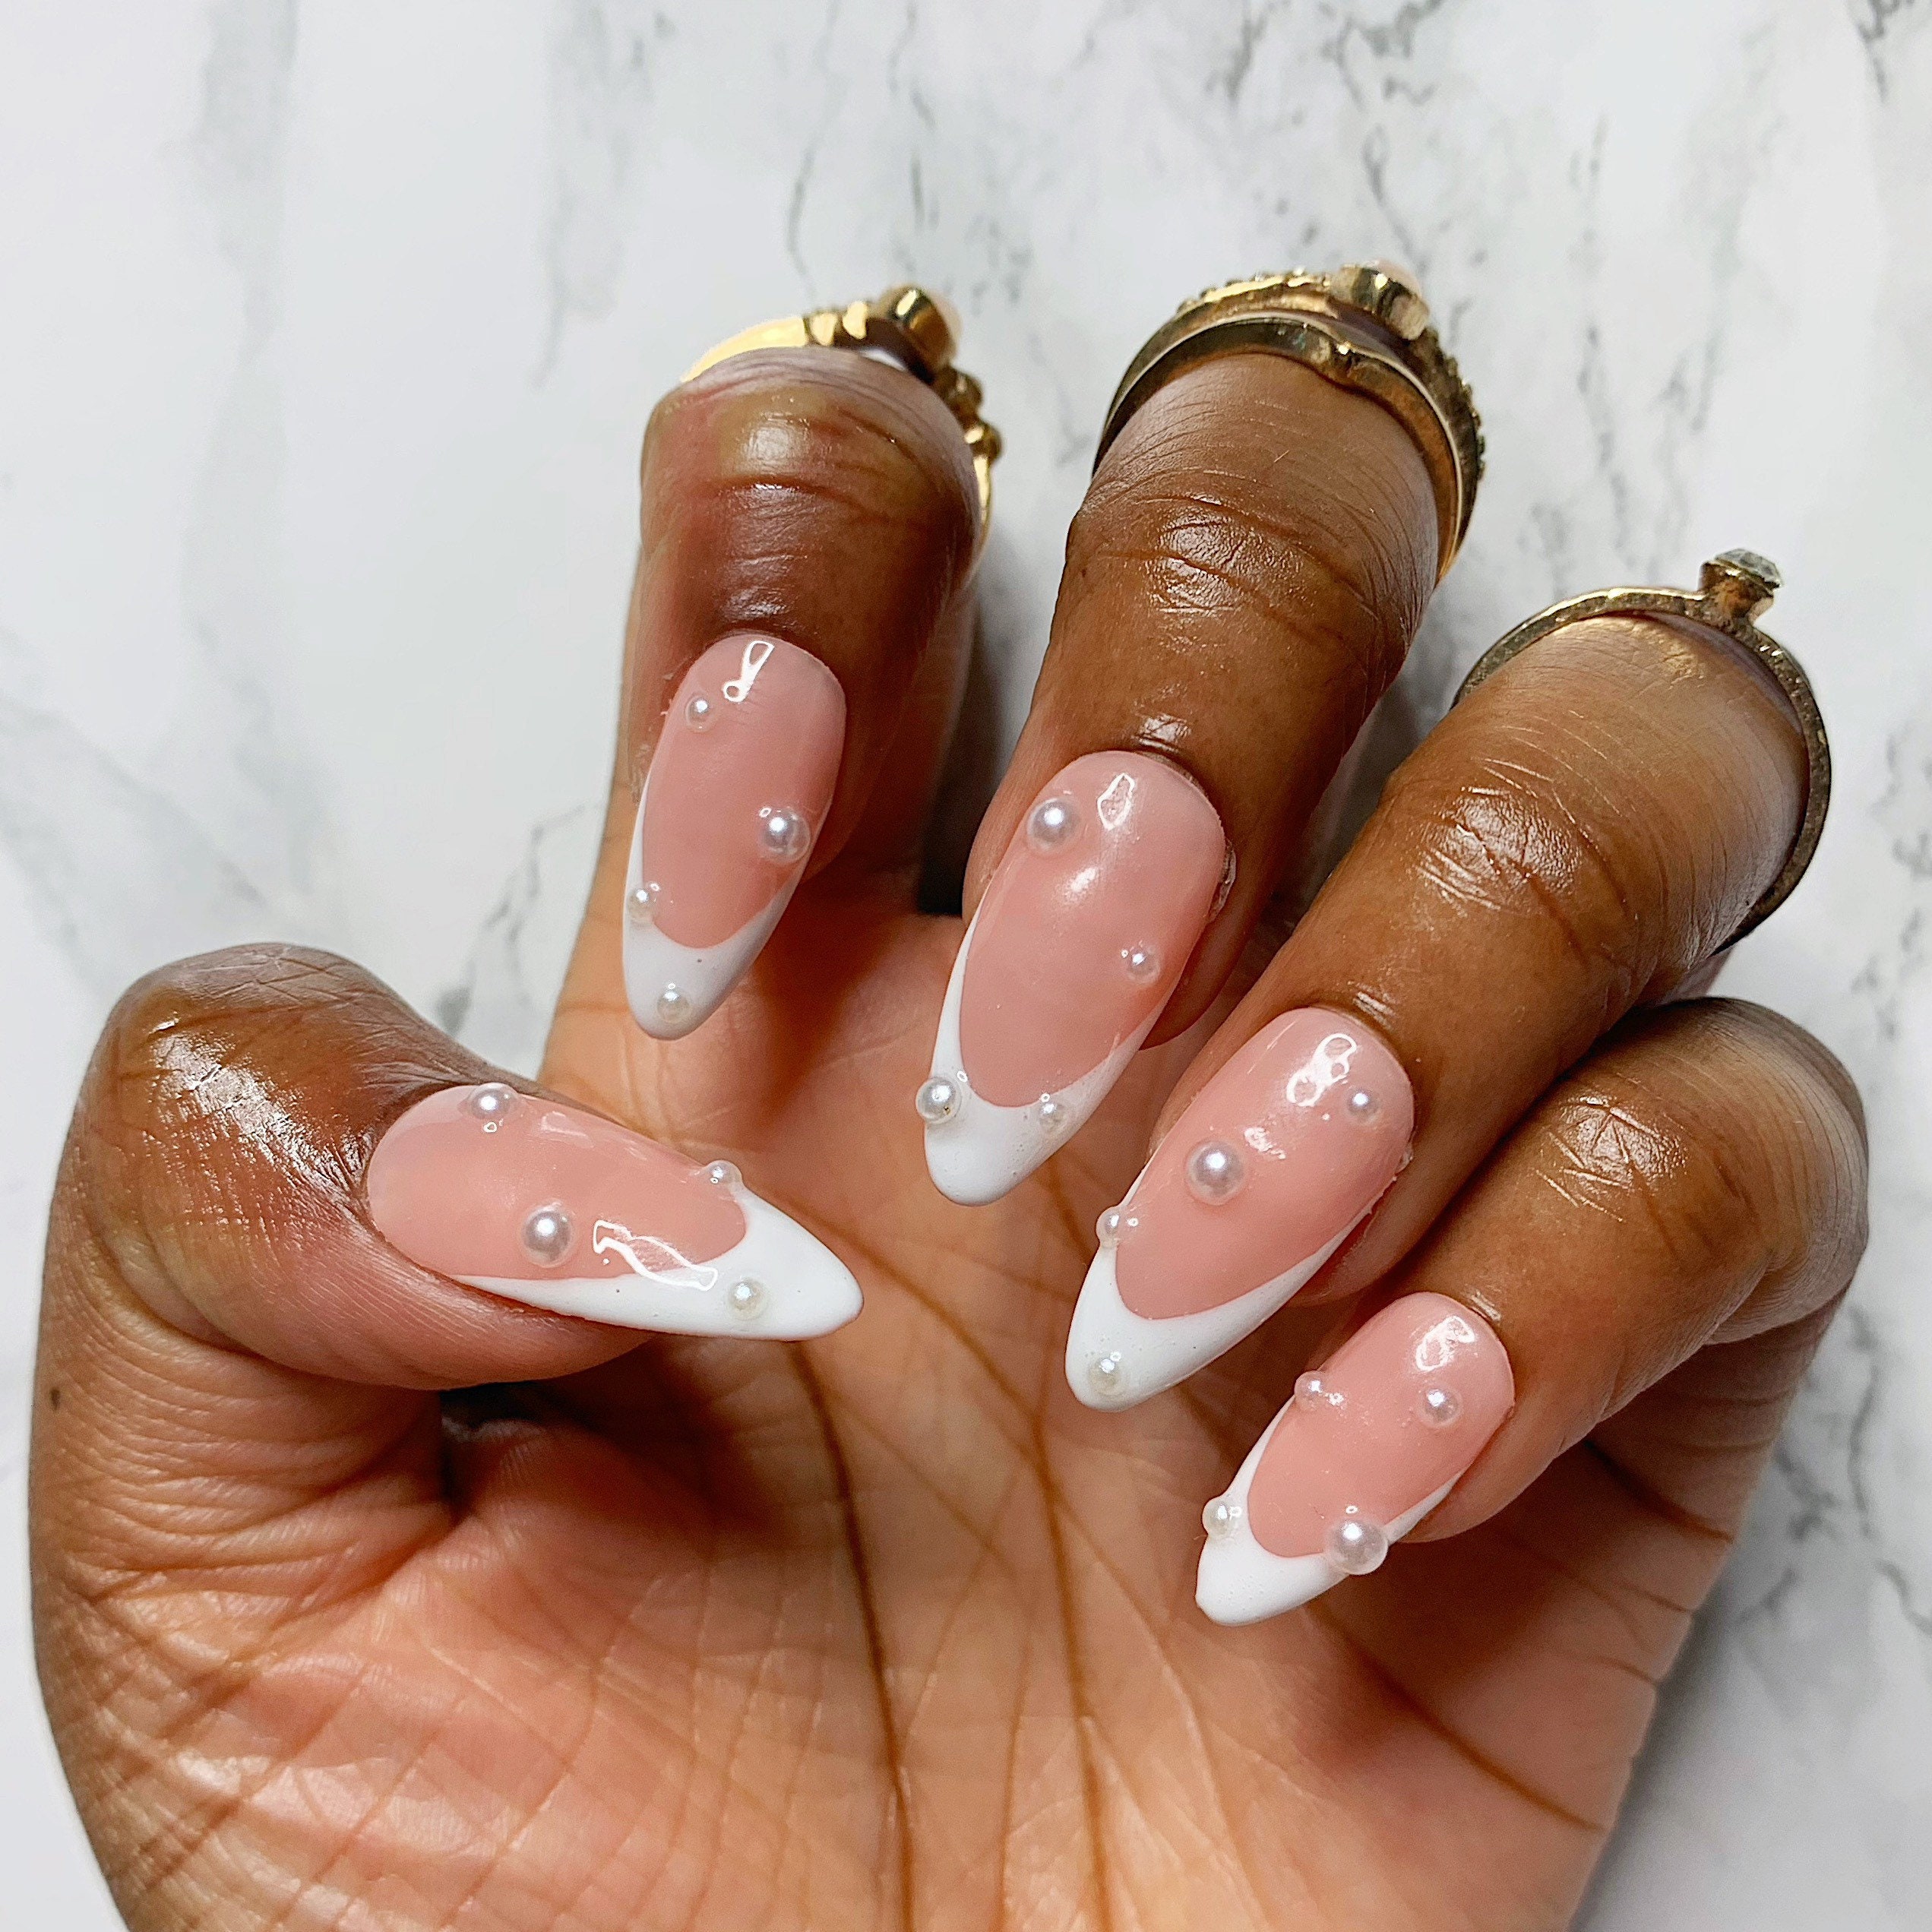 Birthday weekend ready • • • #nails #naillove #french #chevron #almondnails  #shape #white #tips #enhancements #gelnails #gelish #g... | Instagram